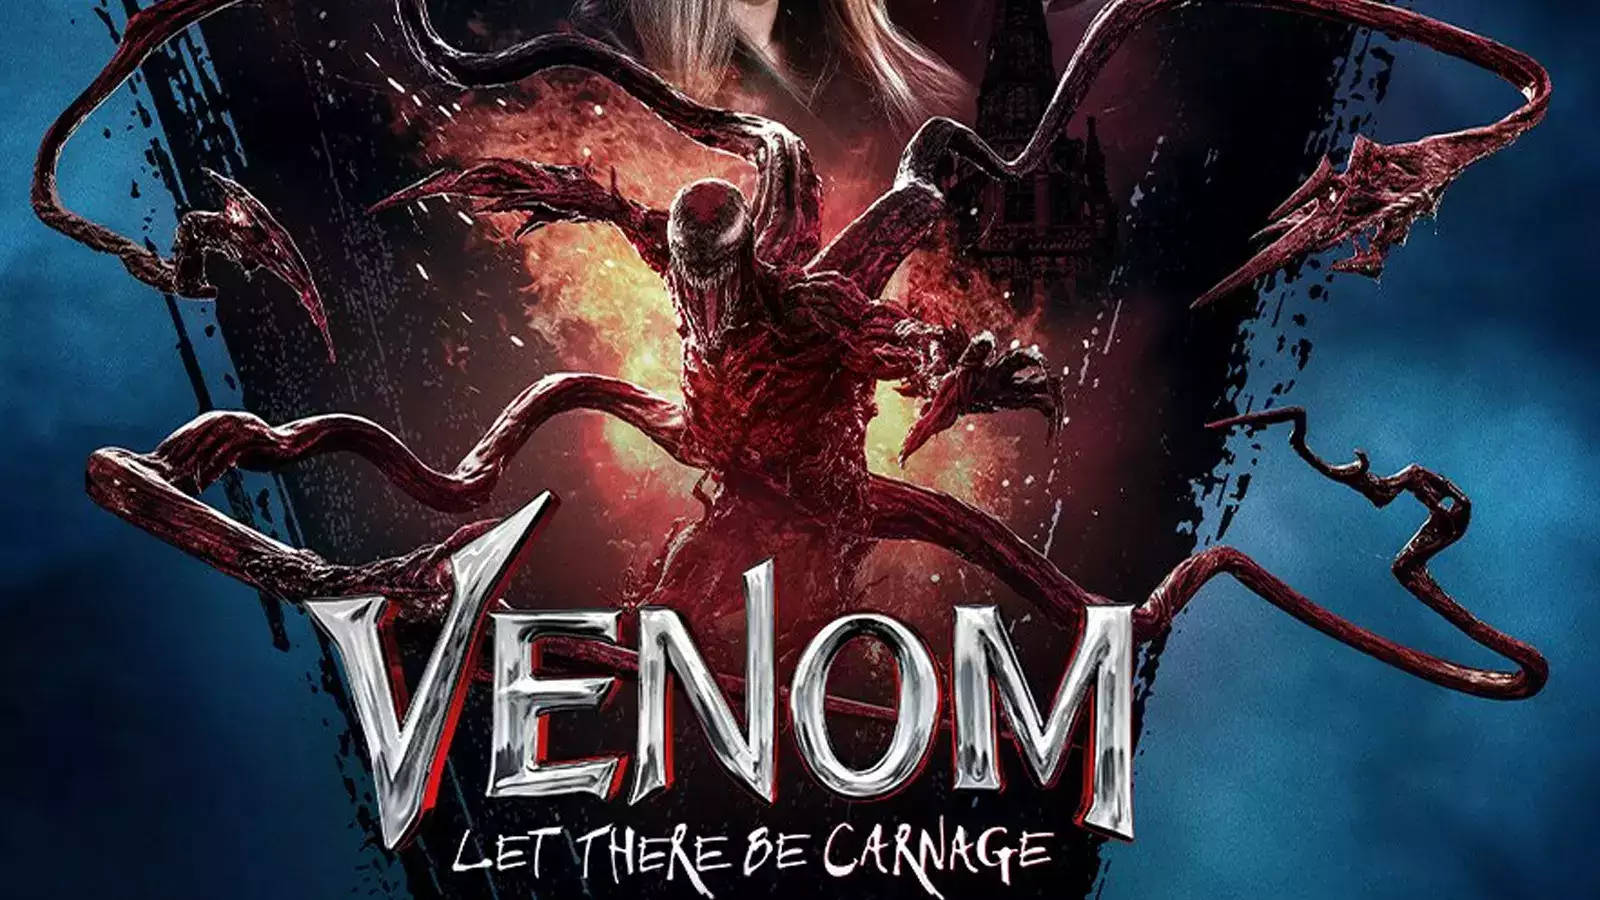 Venom Carnage Artwork Wallpaper